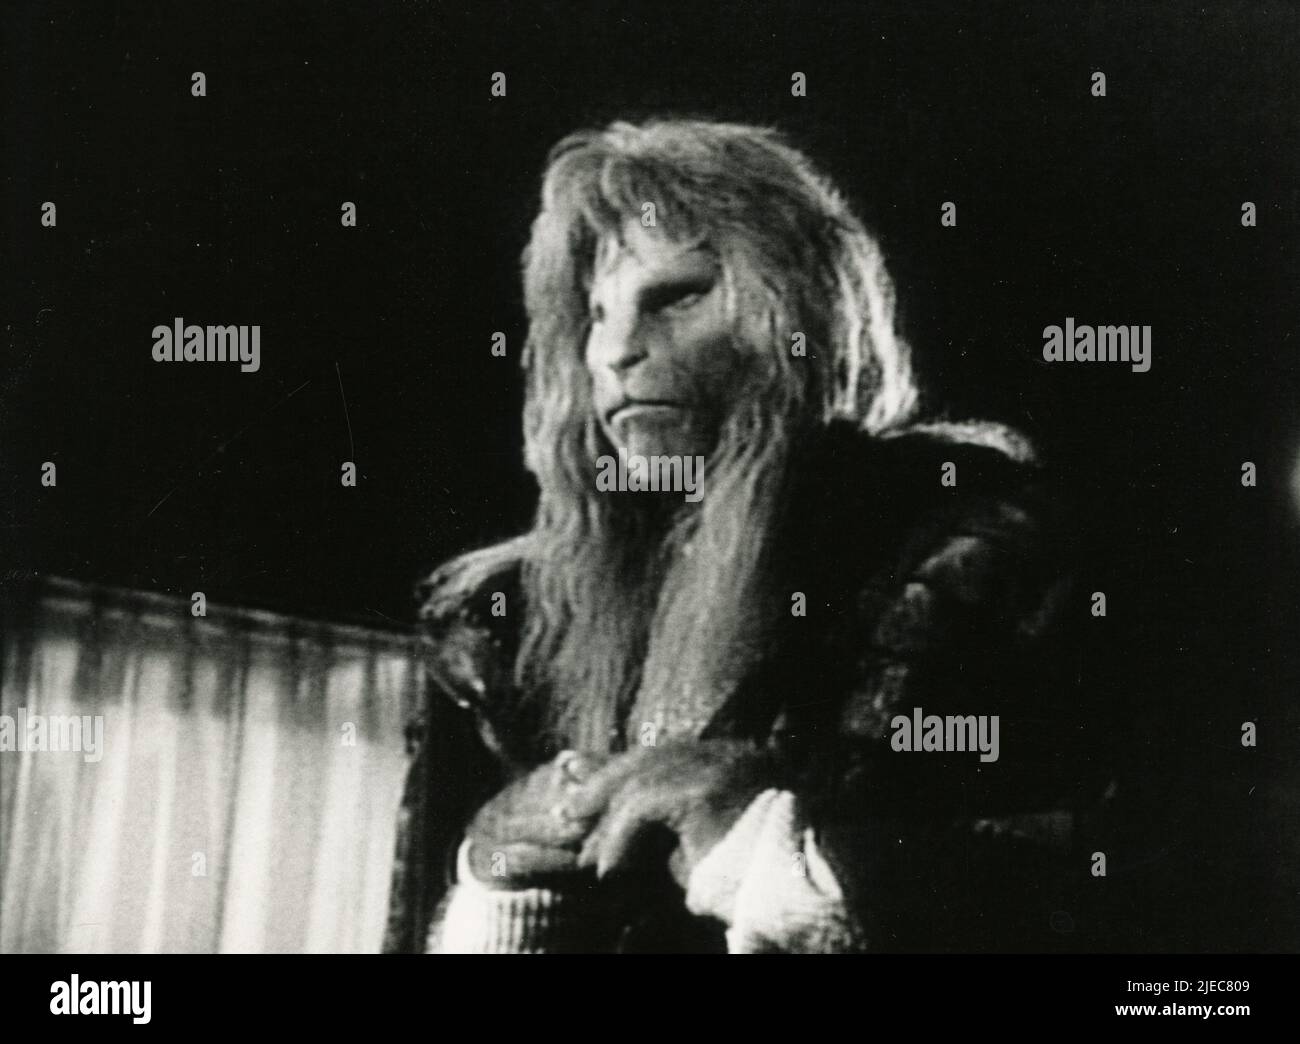 Schauspieler Ron Perlman in der TV-Serie Beauty and the Beast, USA 1989 Stockfoto